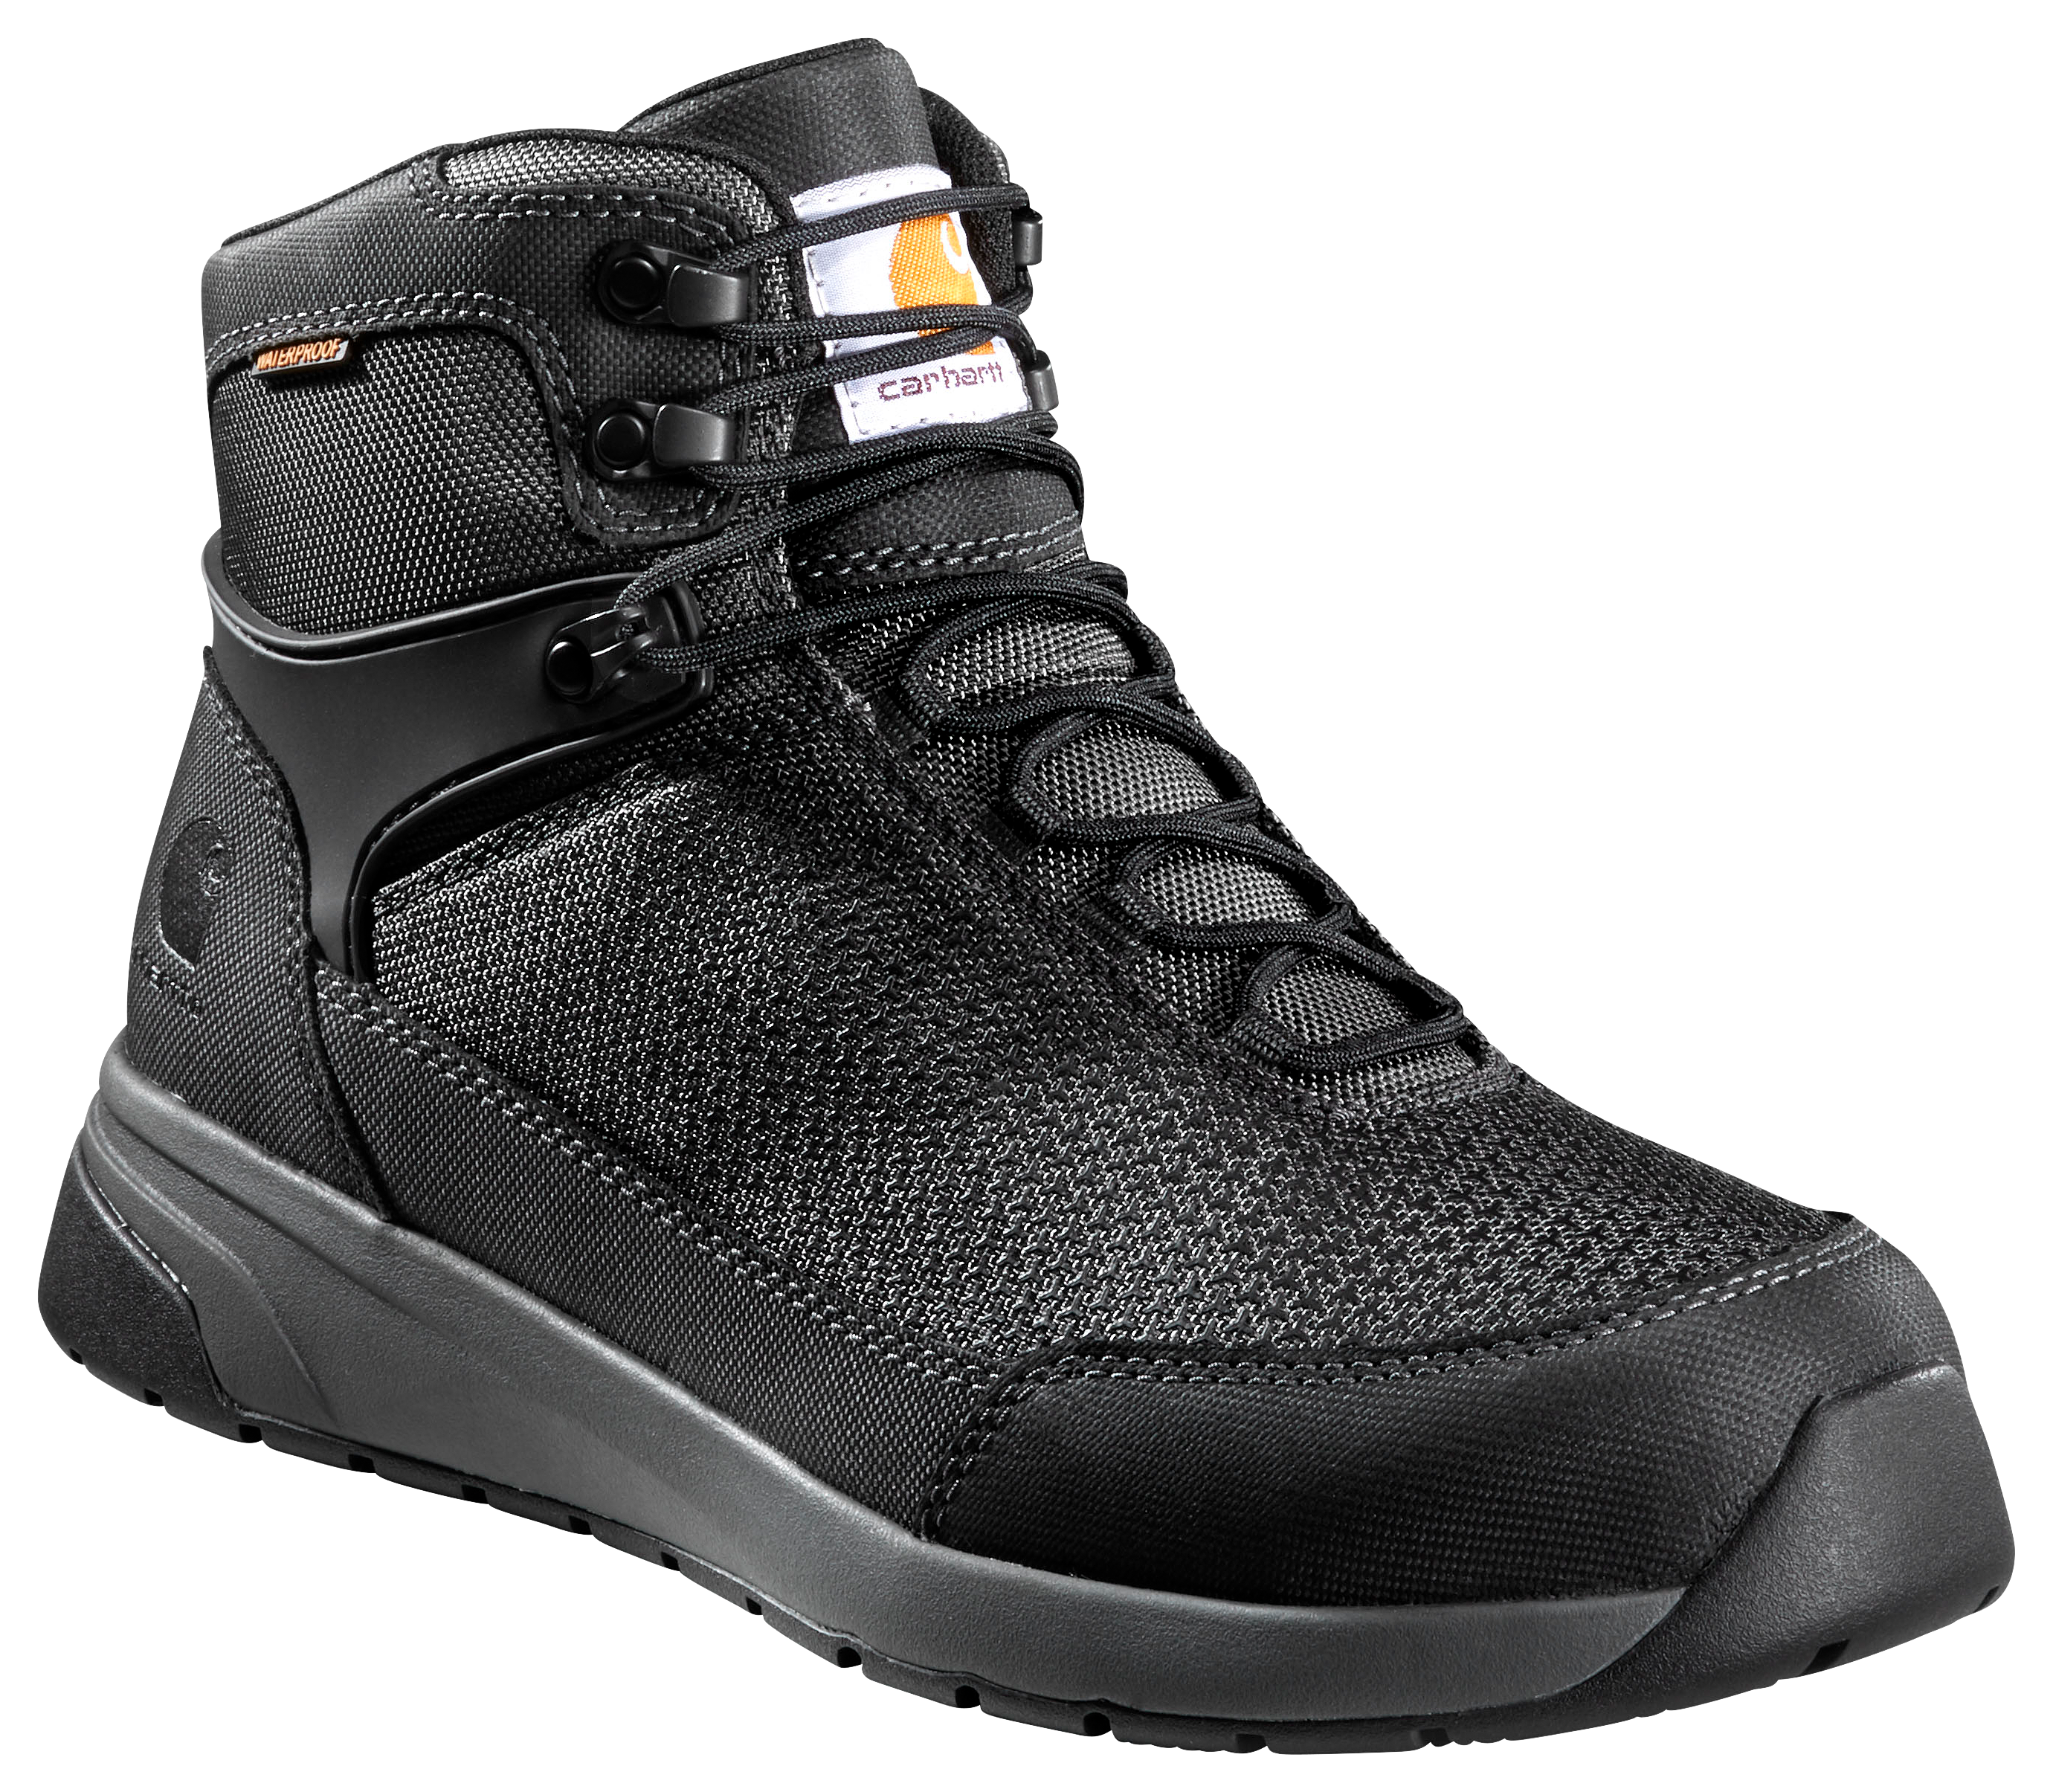 Carhartt Force 6"" Nano Composite-Toe Work Boots for Men - Black - 10M